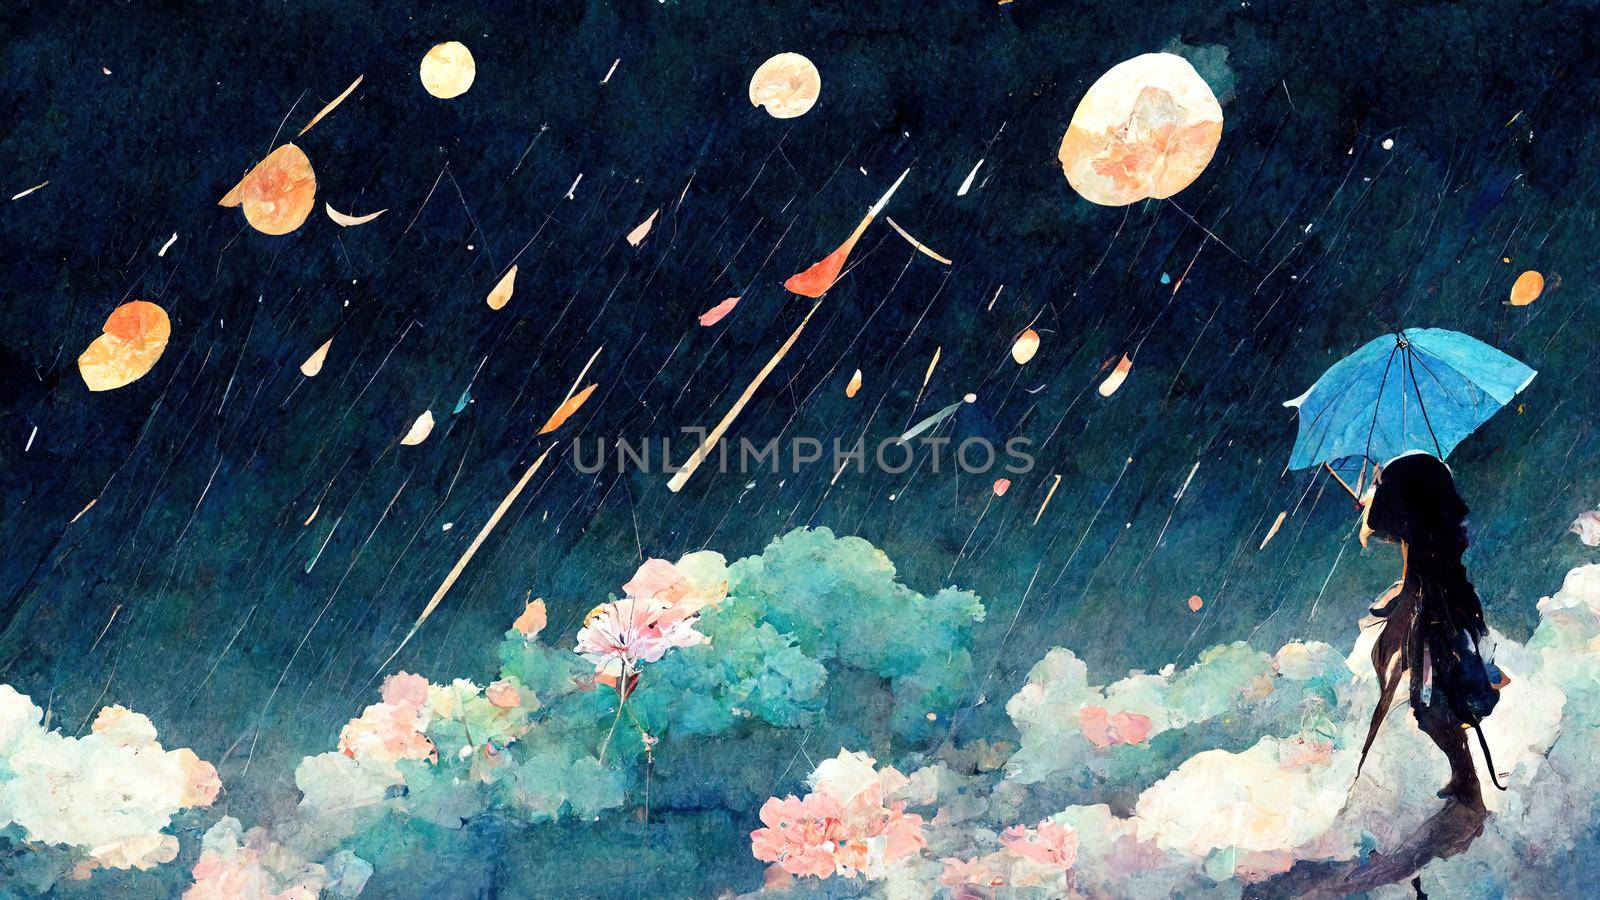 Beautiful Night Sky with Falling Rain and Umbrella Girl Illustration anime style. High quality illustration